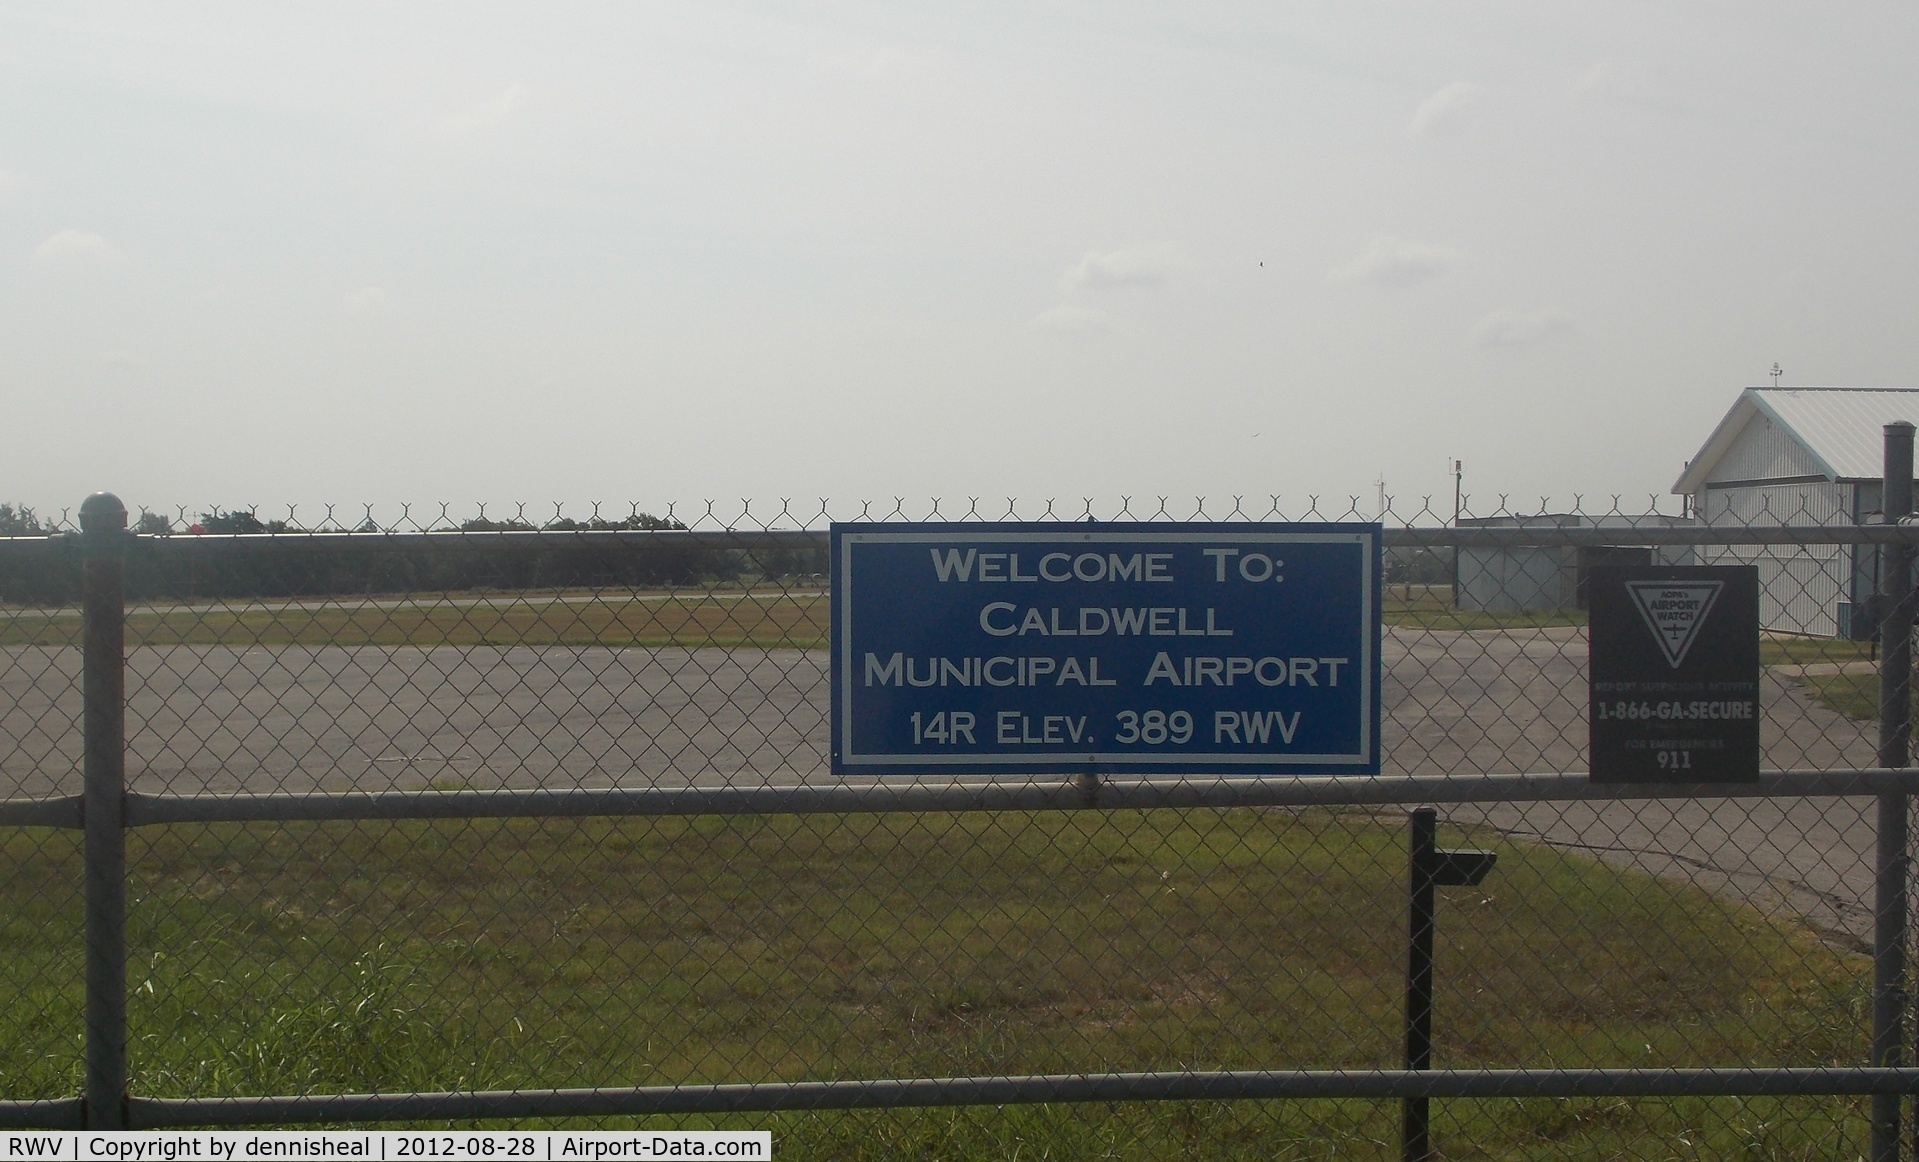 Caldwell Municipal Airport (RWV) - CALDWELL MUNI AIRPORT, CALDWELL TX